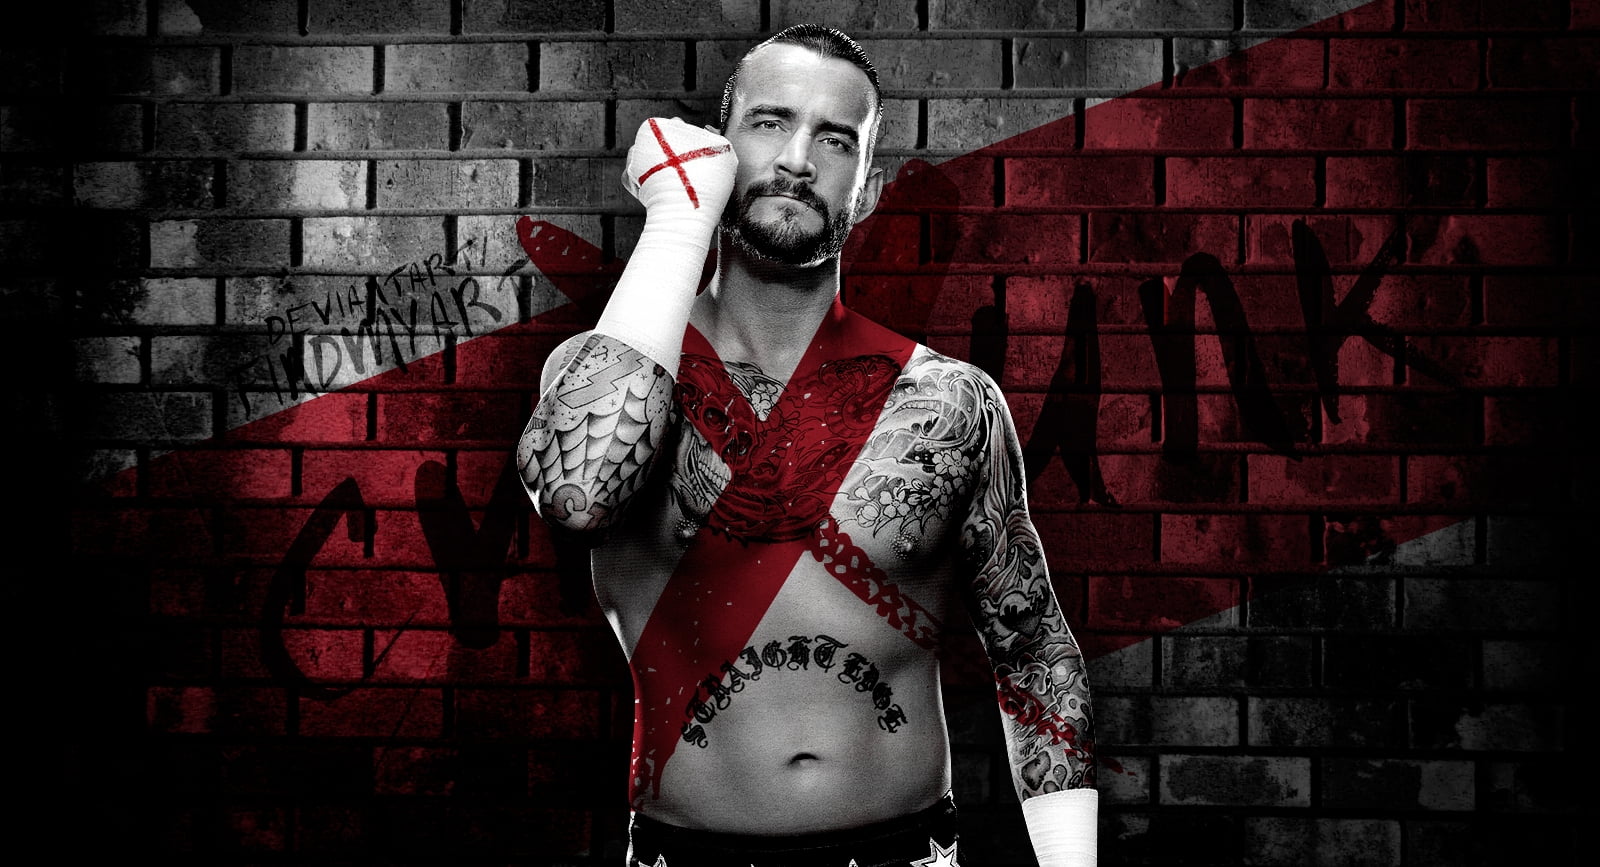 Cm Punk Dark Background, CM Punk wallpaper, WWE, wrestler, wall - building feature